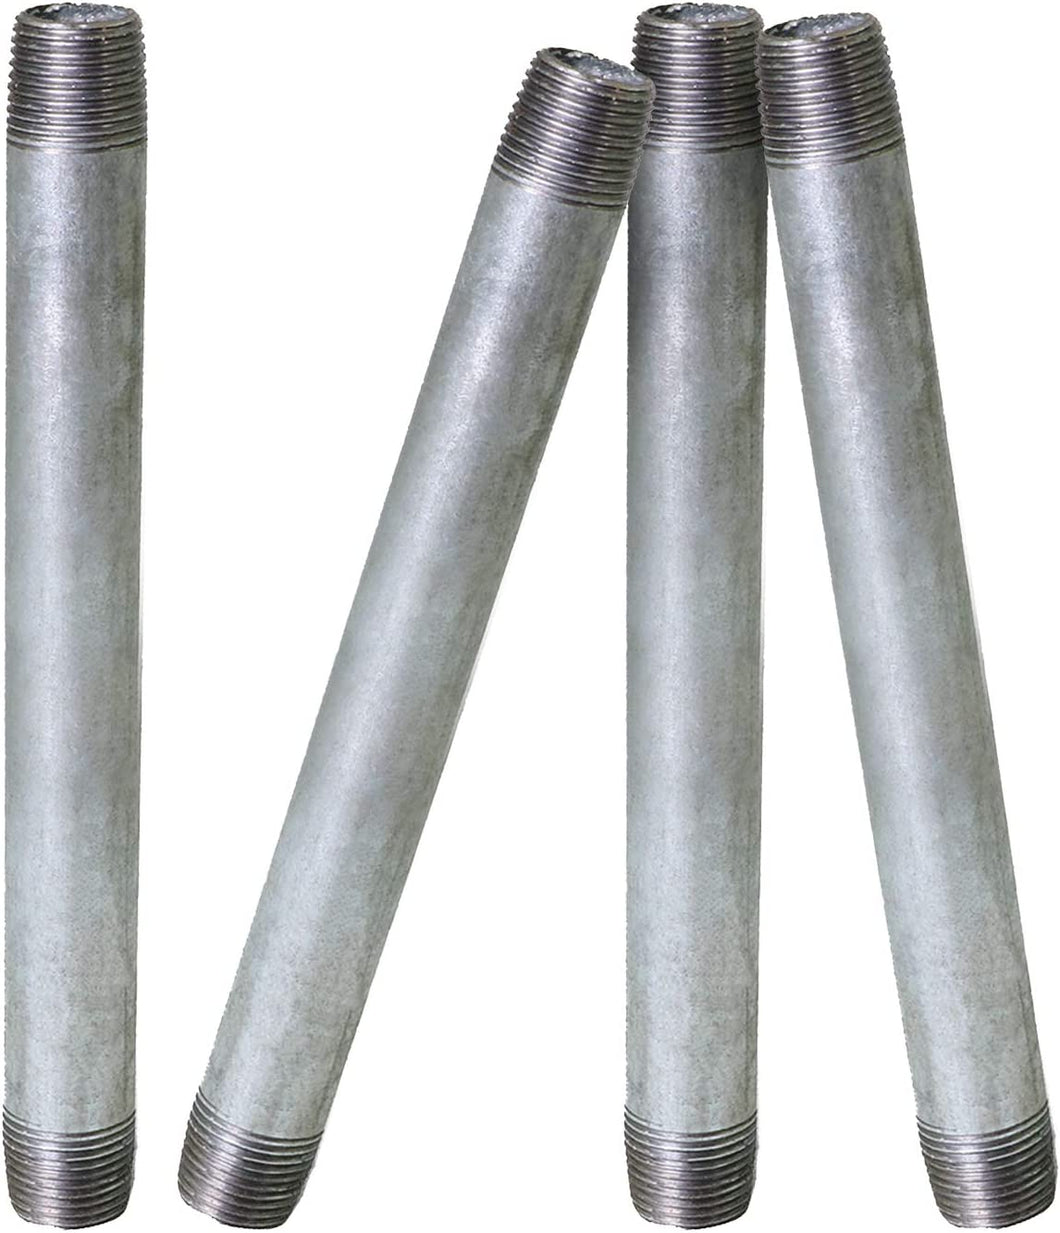 Everflow Supplies NPGL1525-10 steel nipple pipe 1-1/2